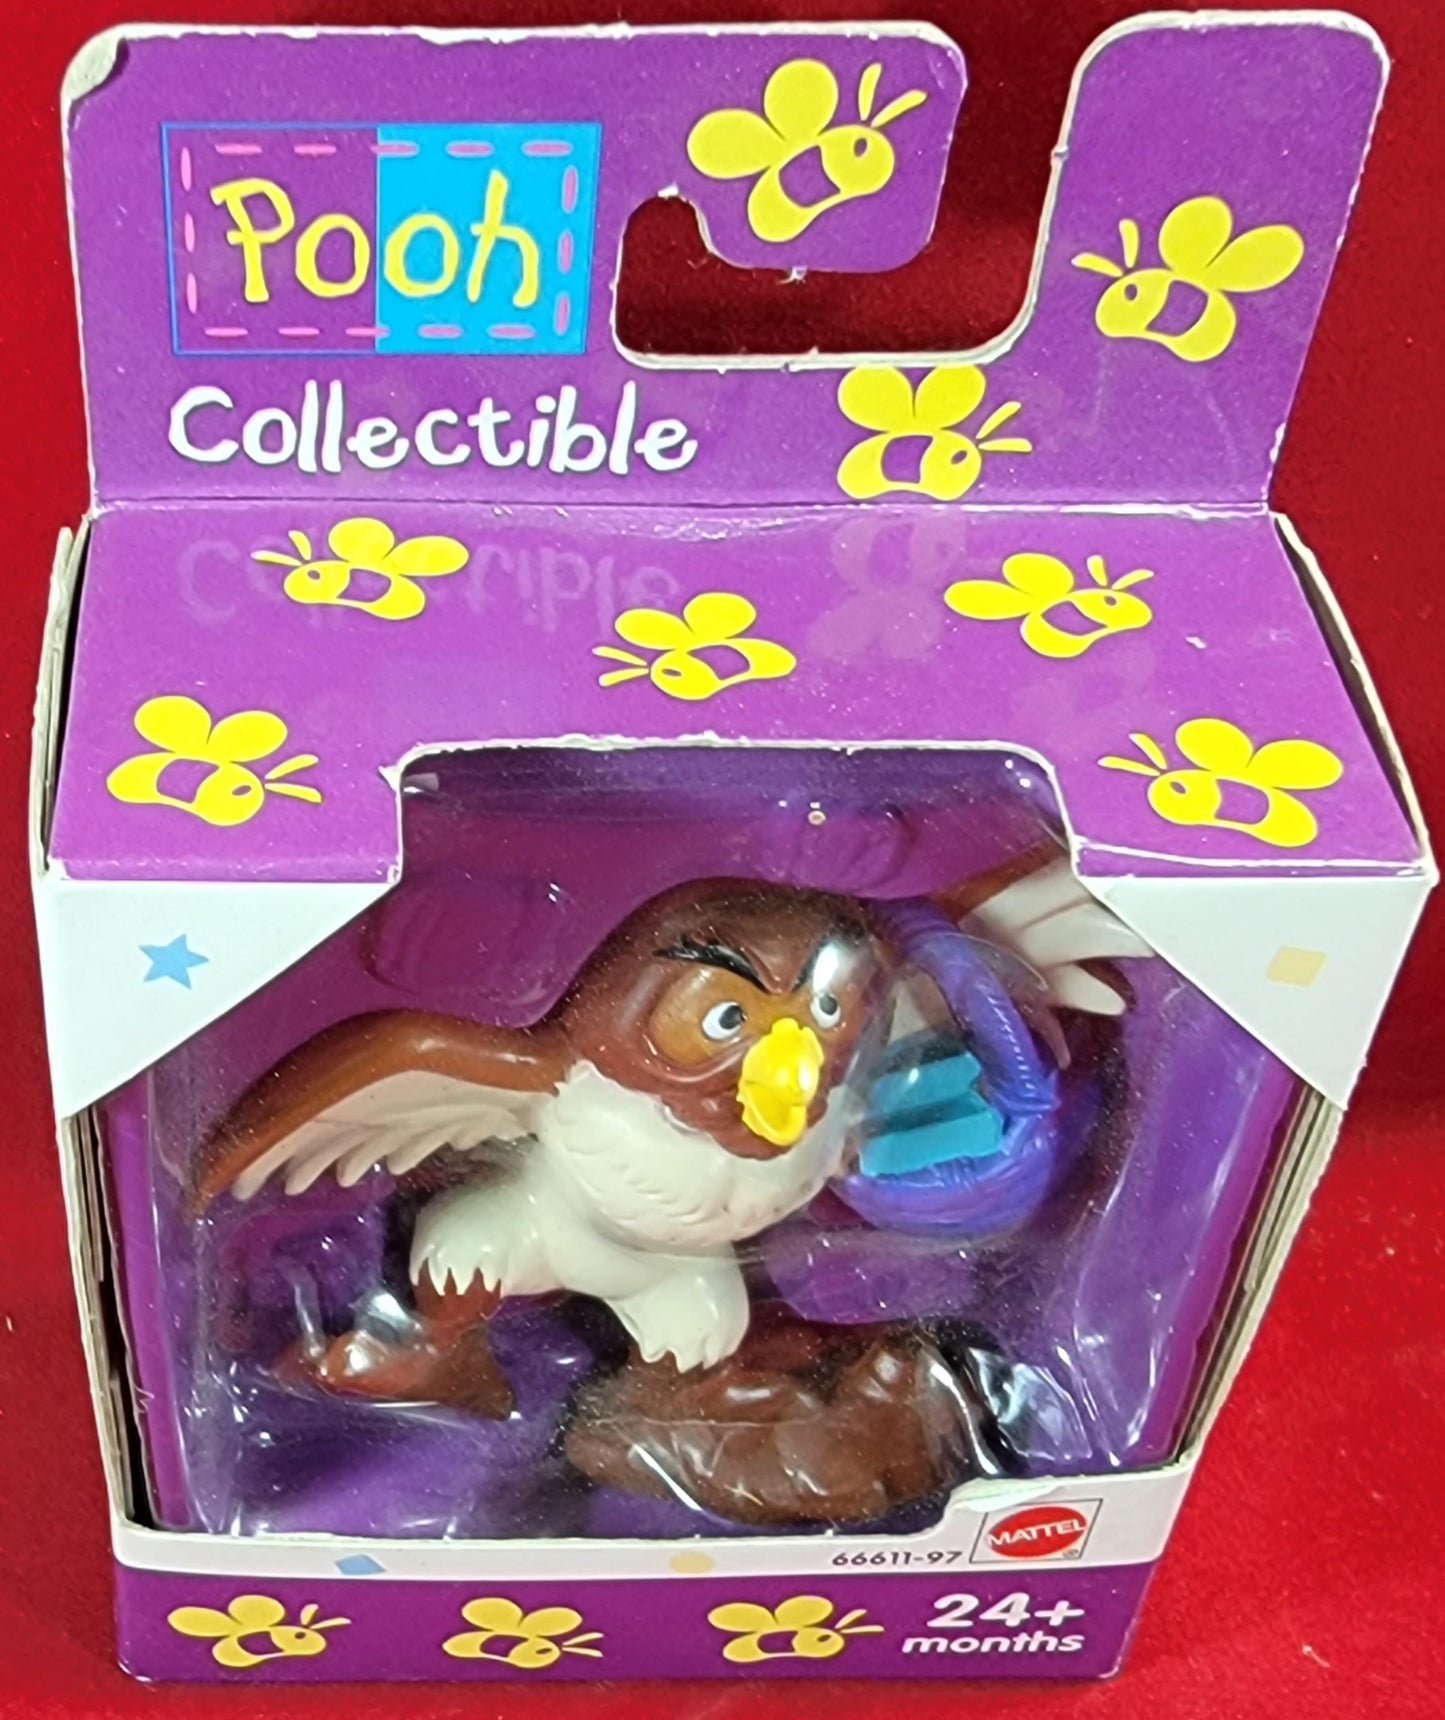 Pooh collectible  wise owl figure (nib)